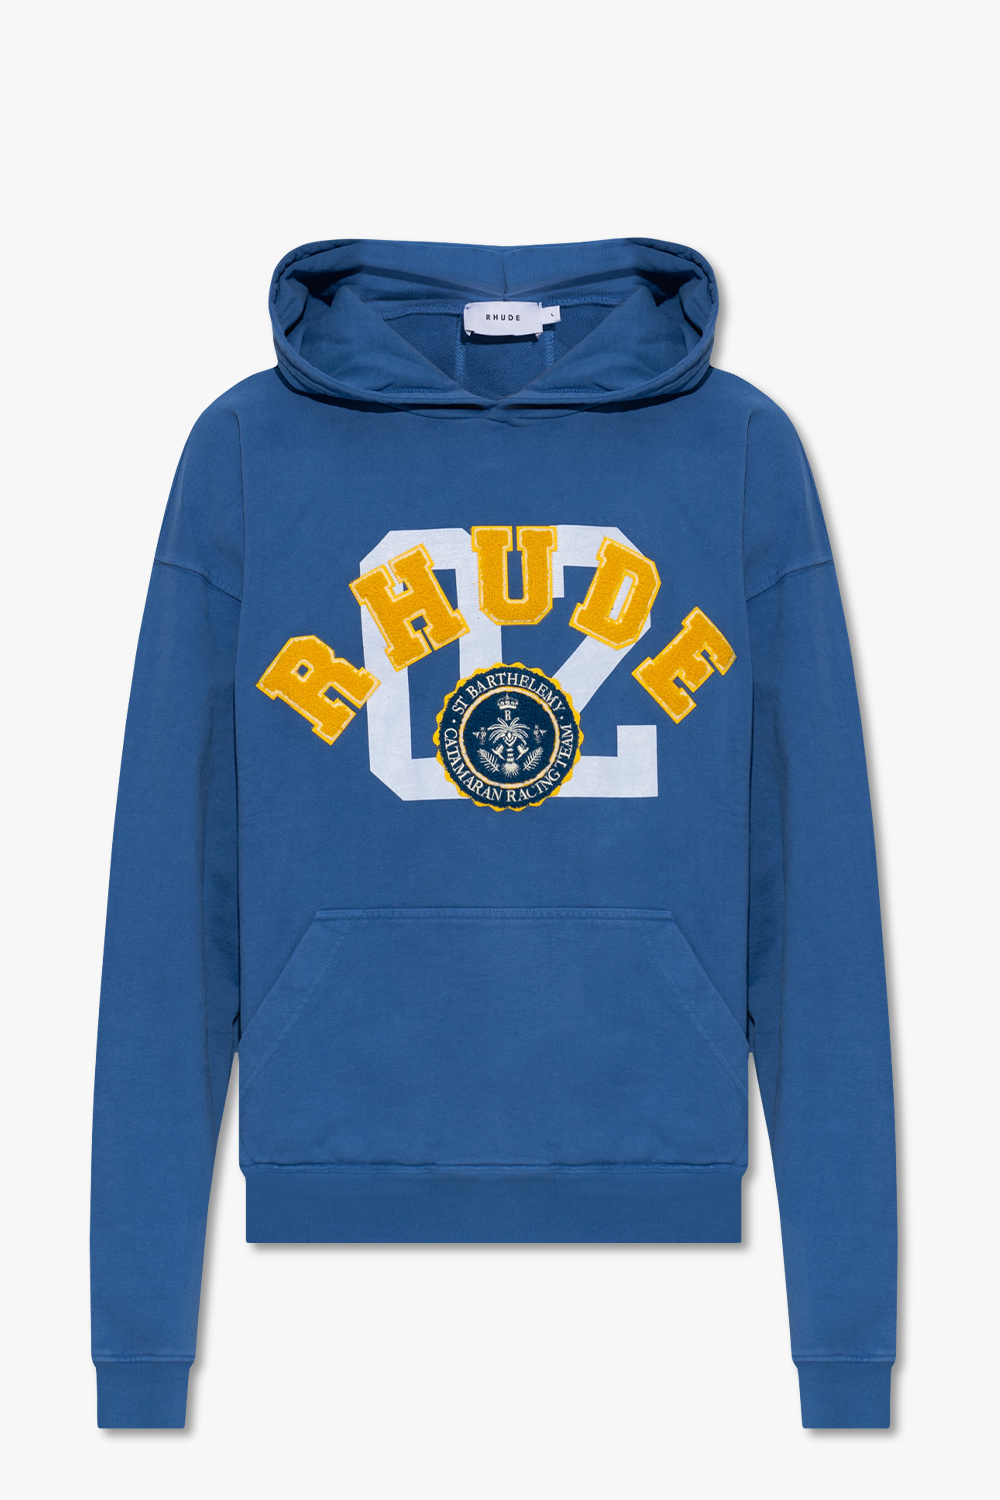 logo embroidered jersey bomber Rhude - Australia hoodie - Space Nylon jacket Blue GenesinlifeShops Plein